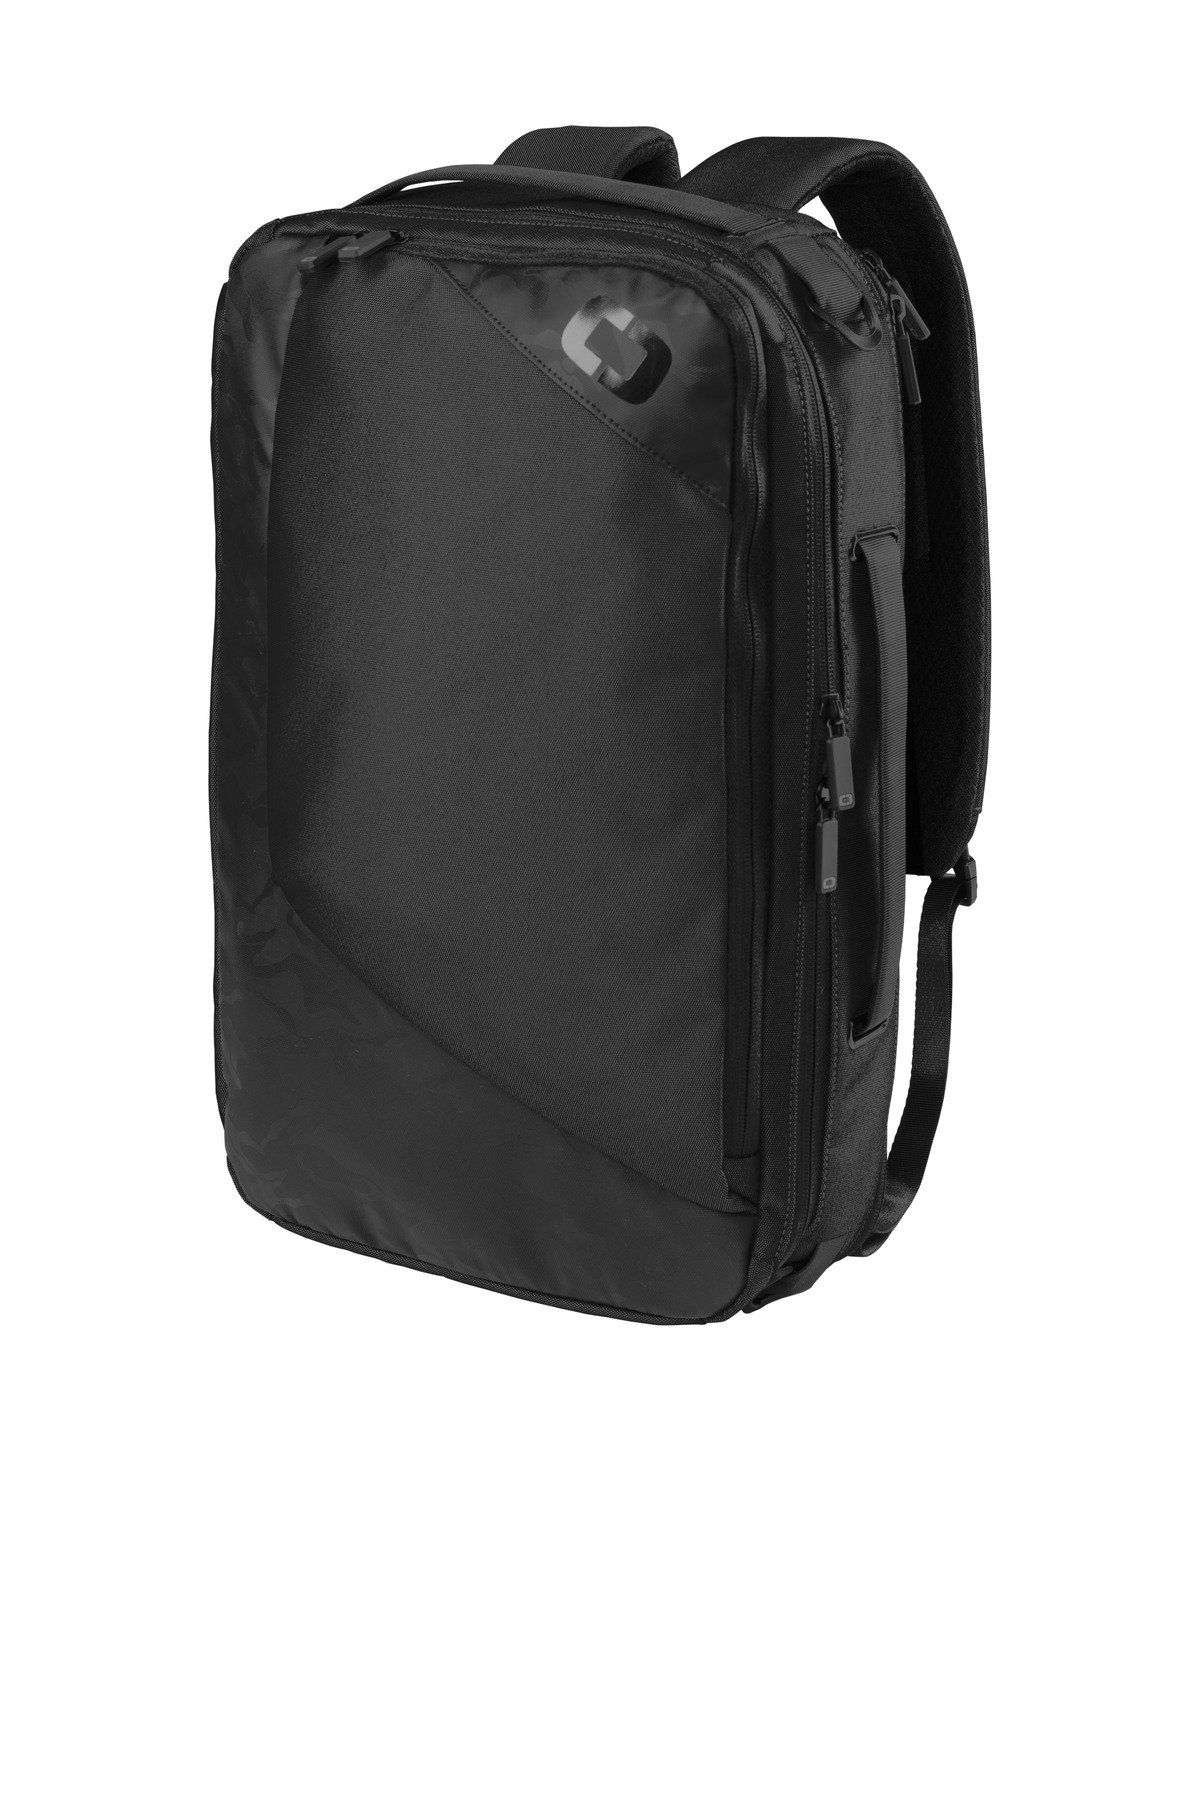 OGIO Hospitality Bags ® Convert Pack.-OGIO